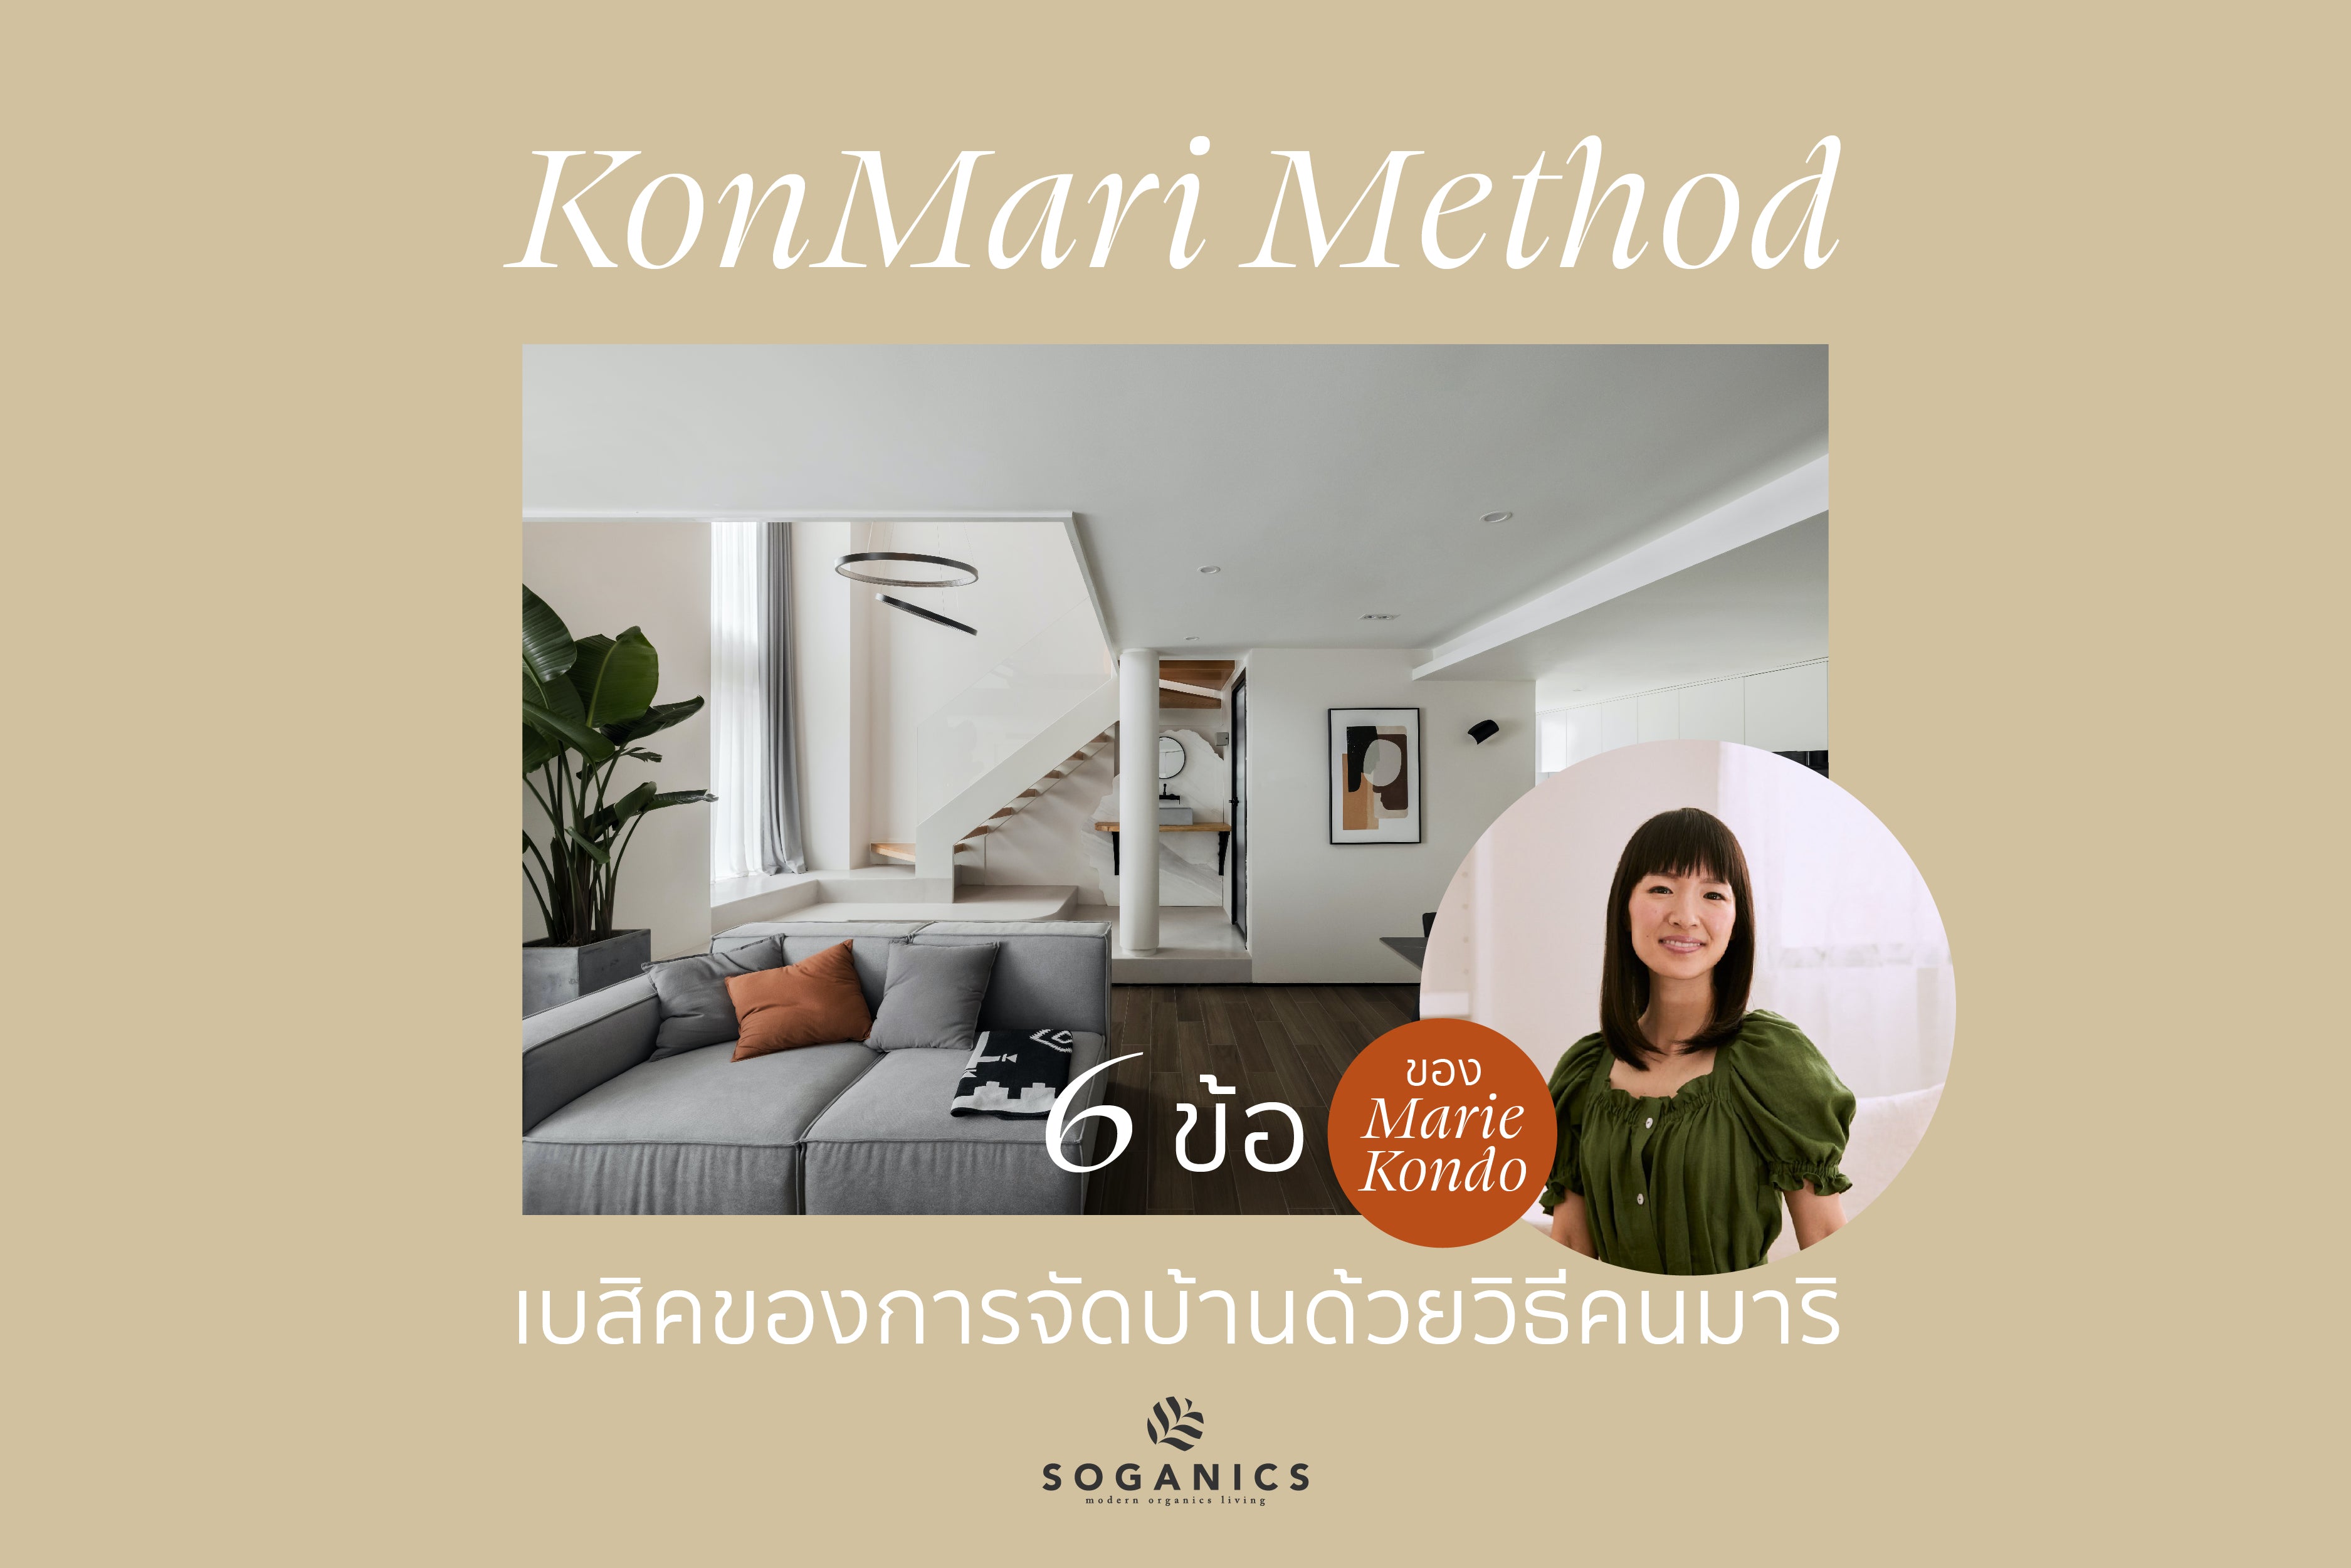 The Konmari Method